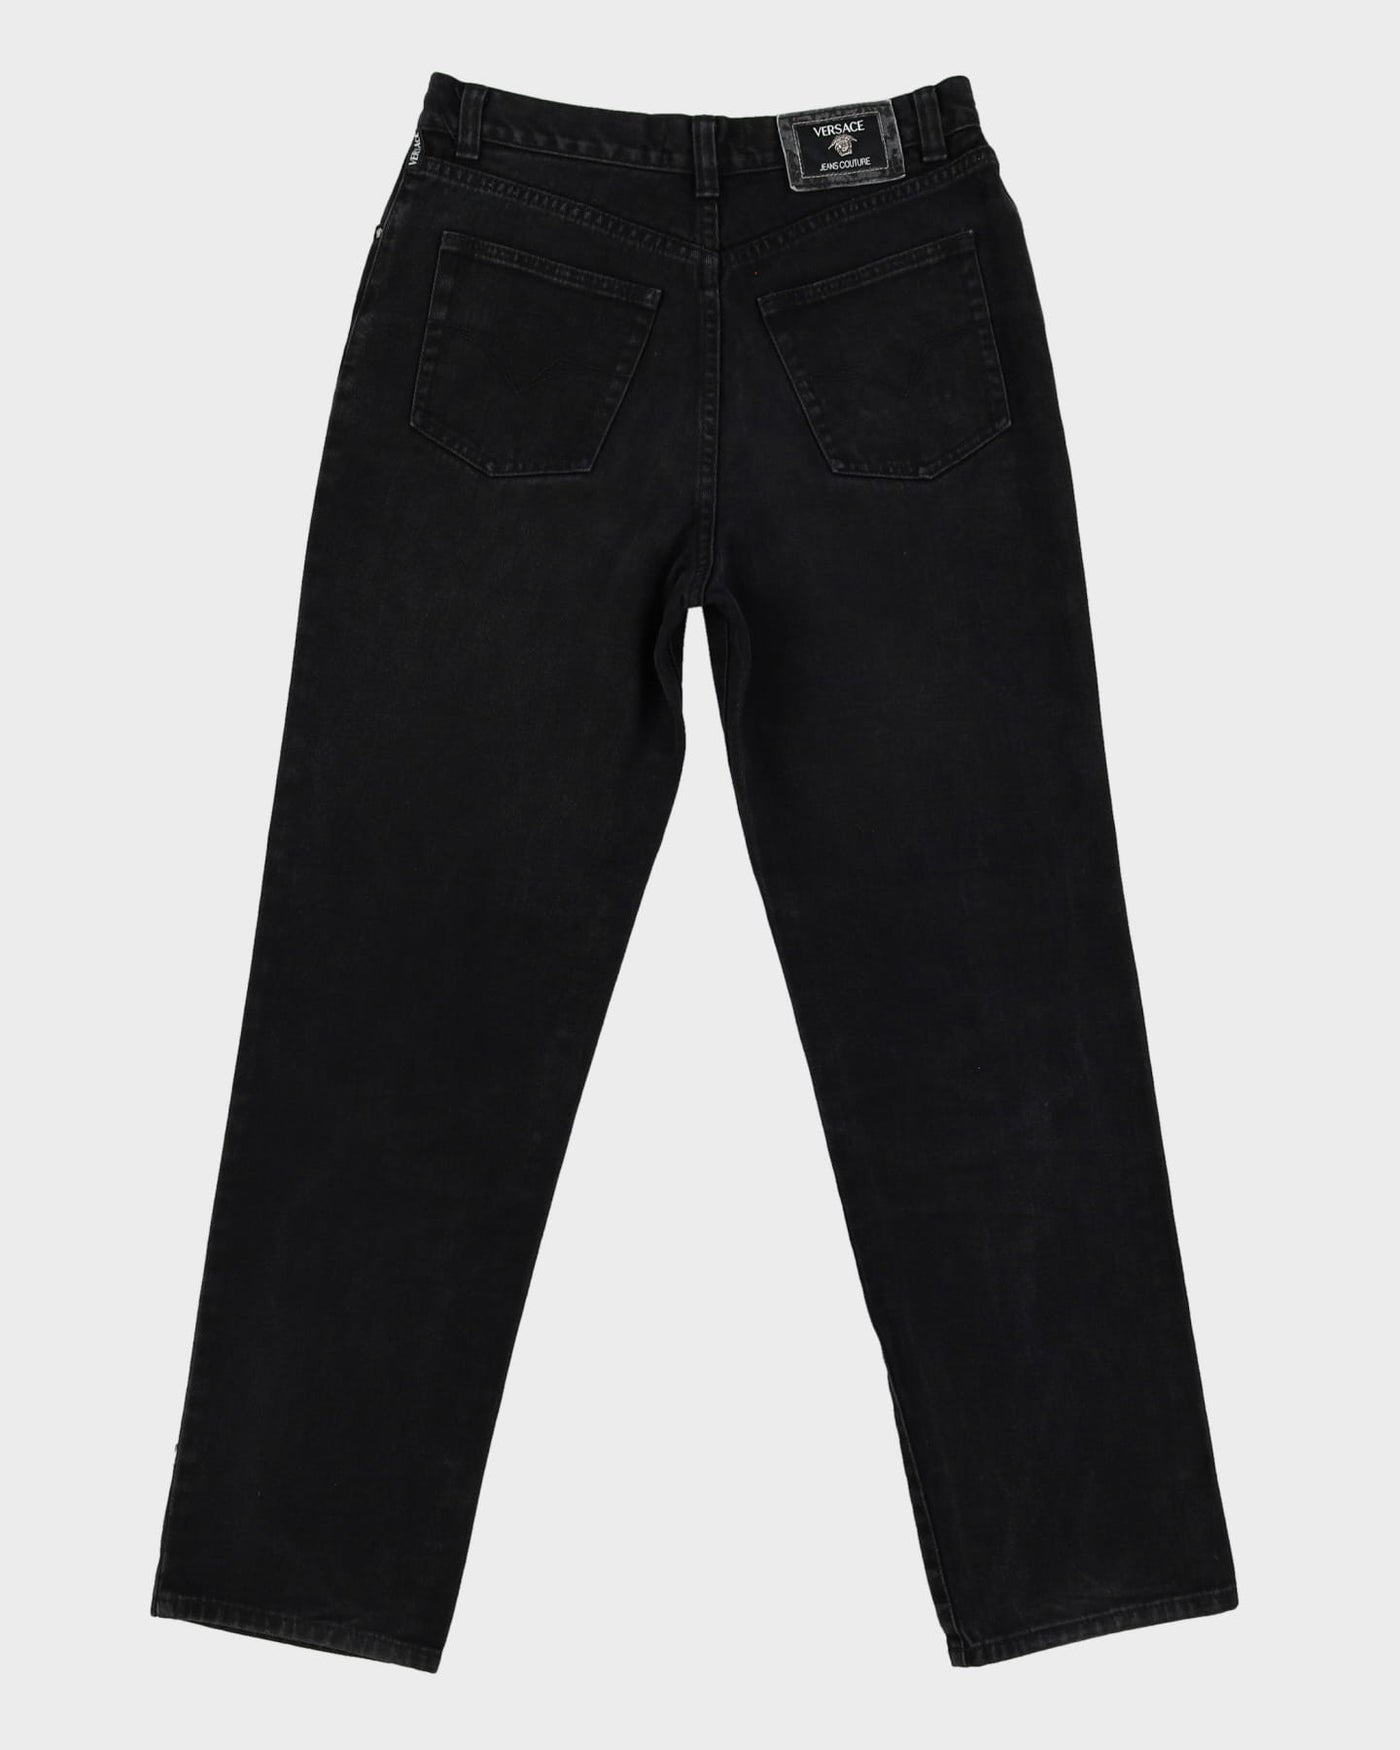 Vintage 90s Versace Dark Wash Black Jeans - W31 L31